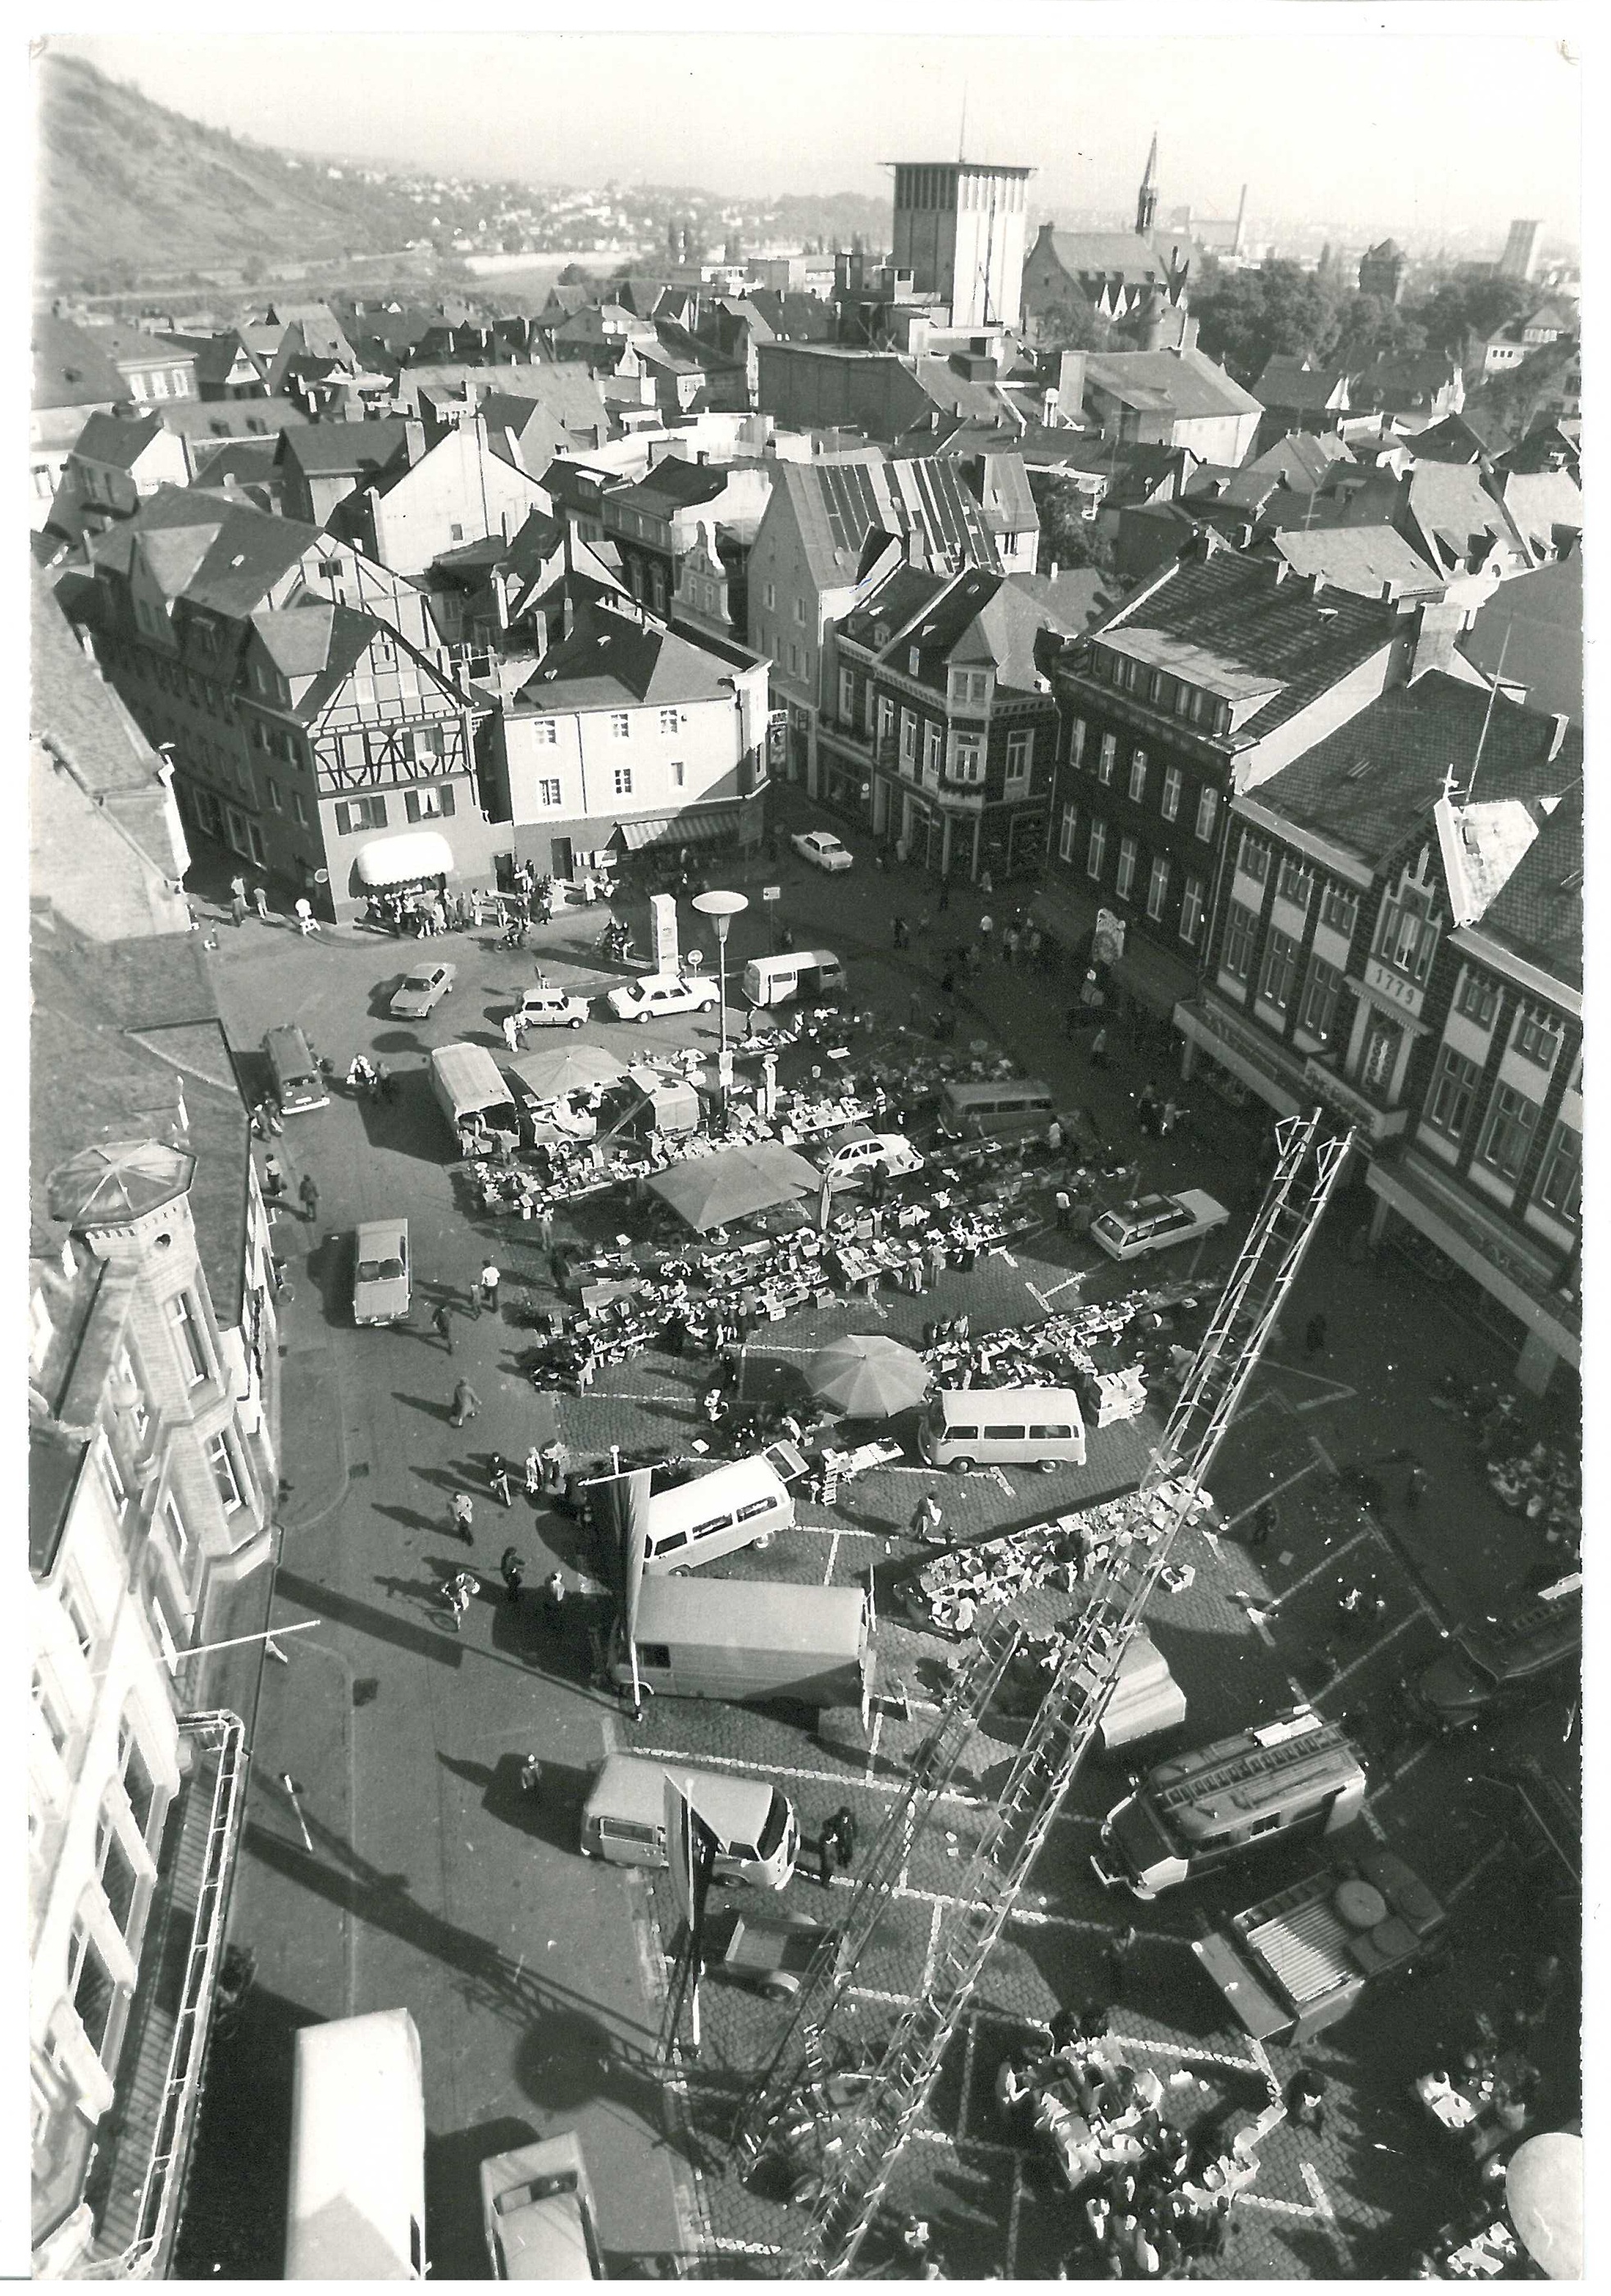 Luftbildfotografie des Andernacher Marktplatz (Stadtmuseum Andernach CC BY-NC-SA)